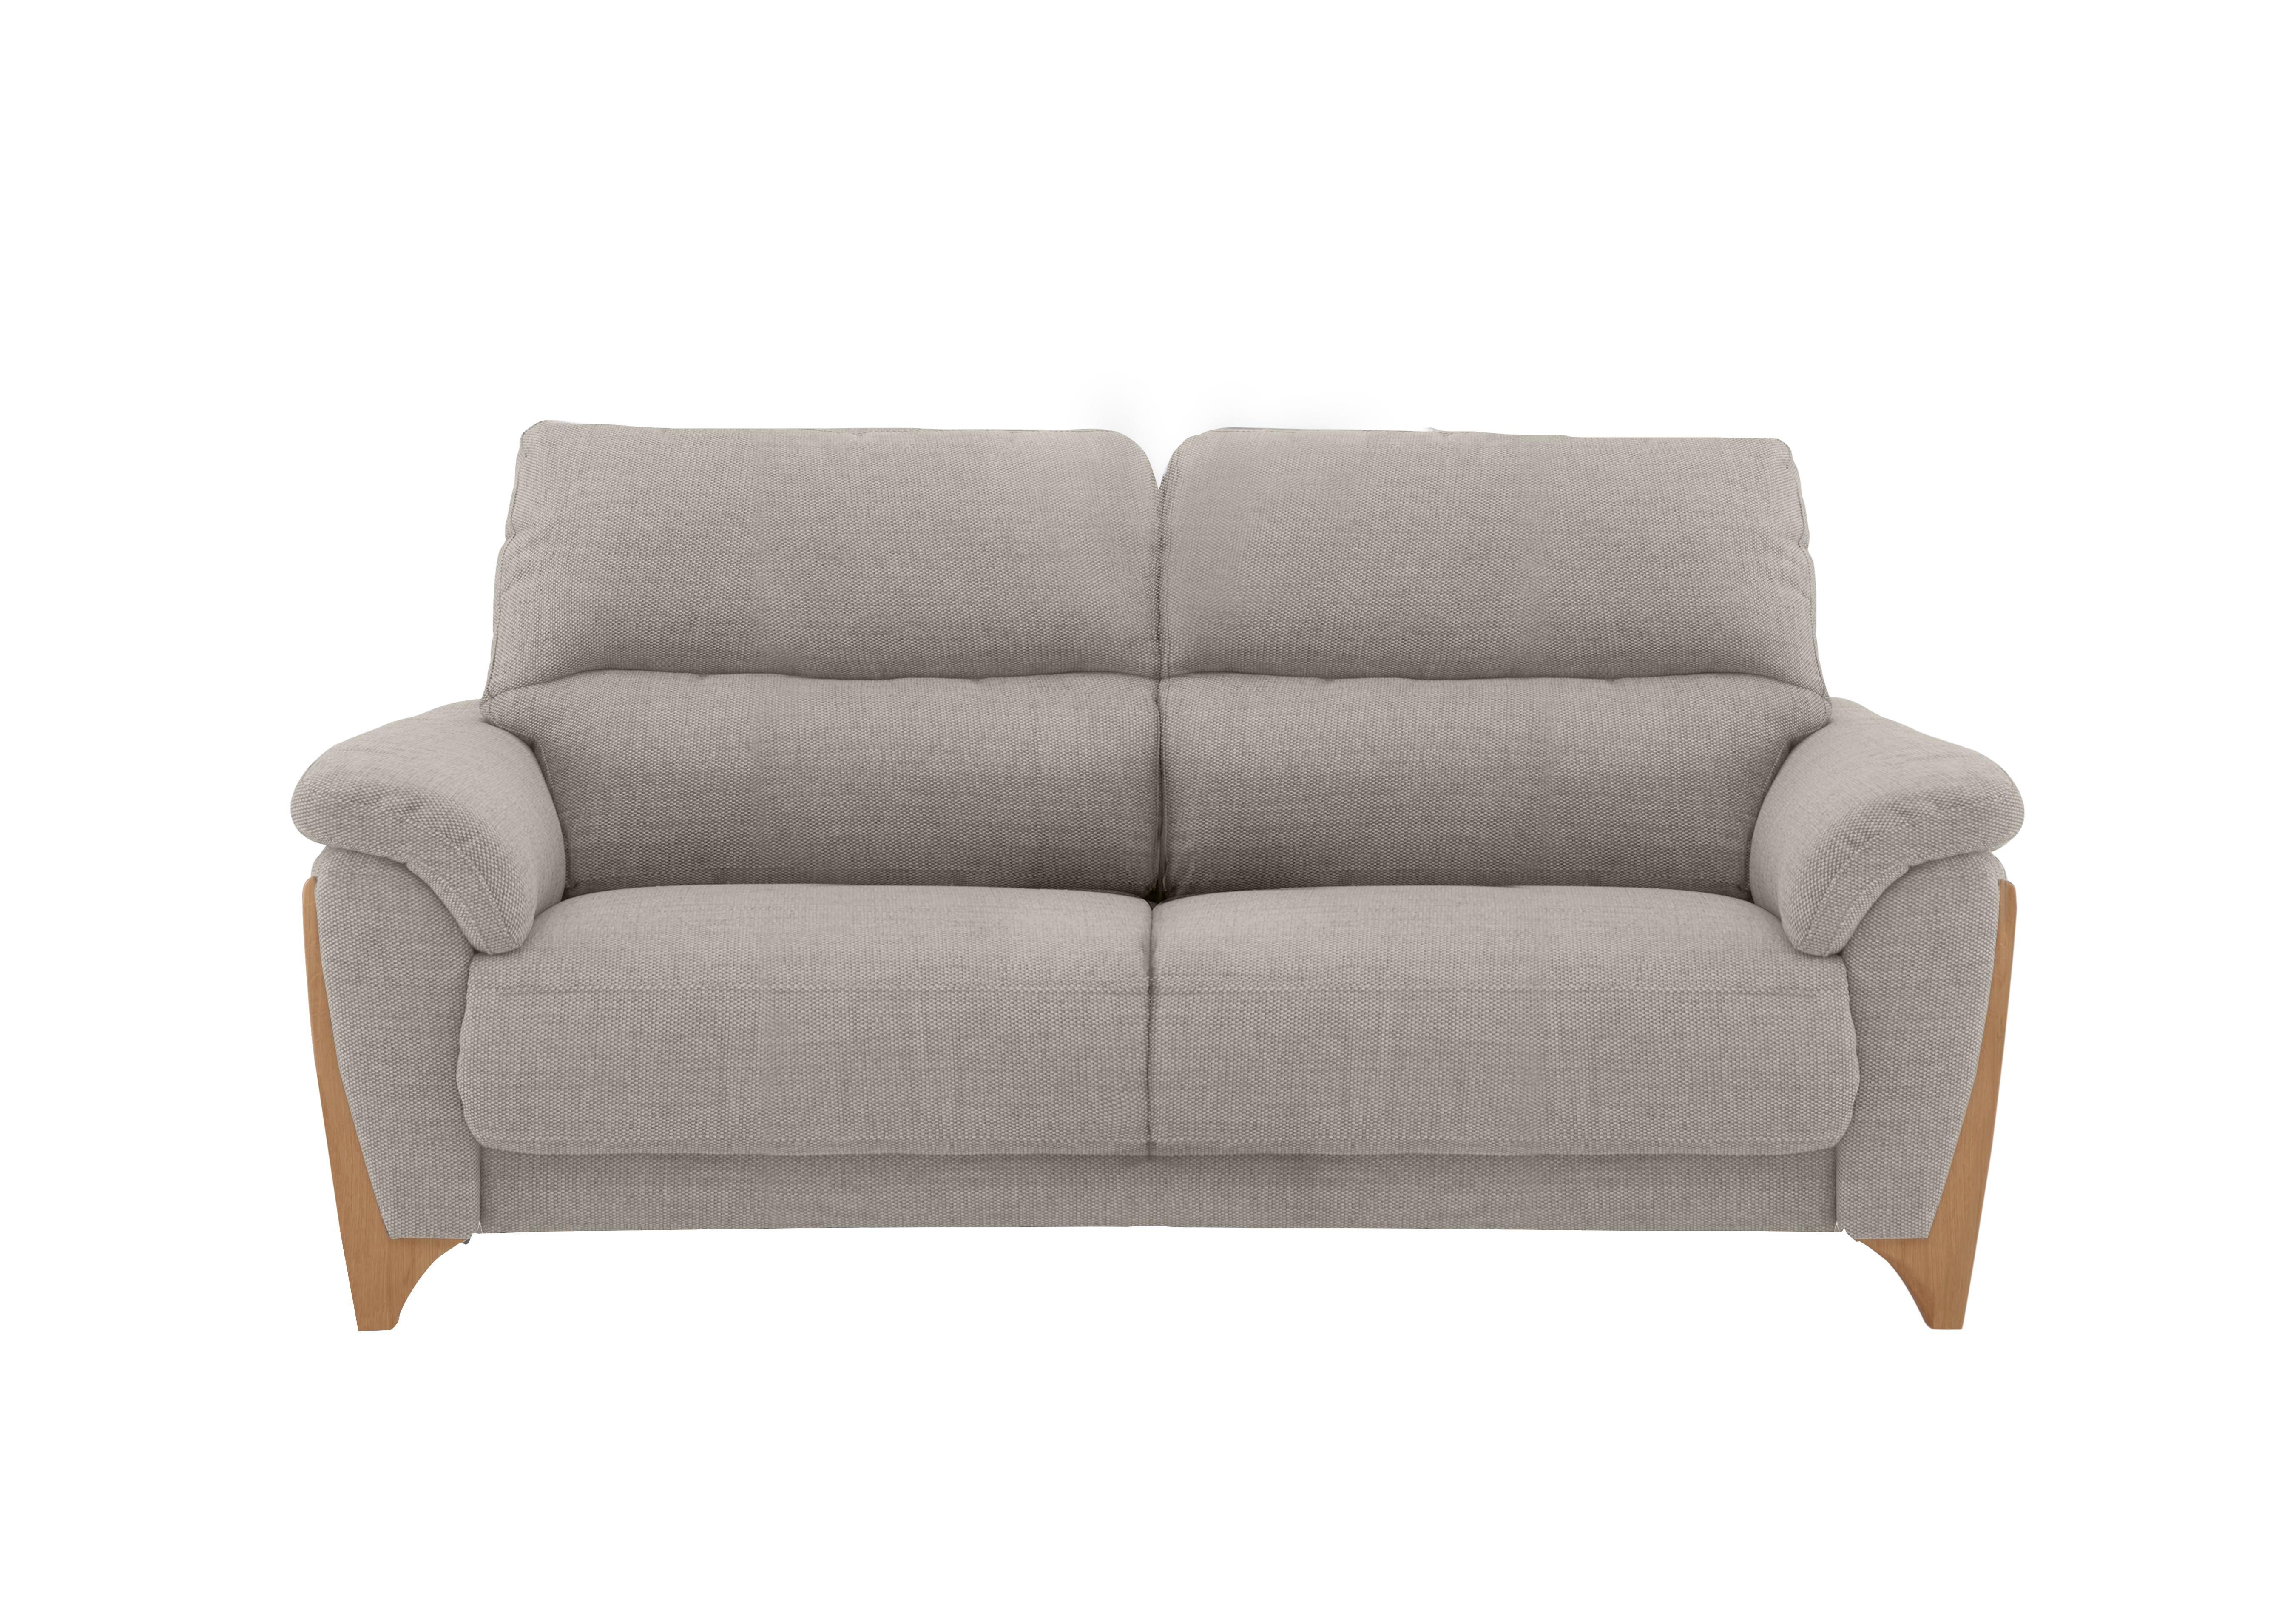 Enna Large Fabric Sofa in P228 on Furniture Village